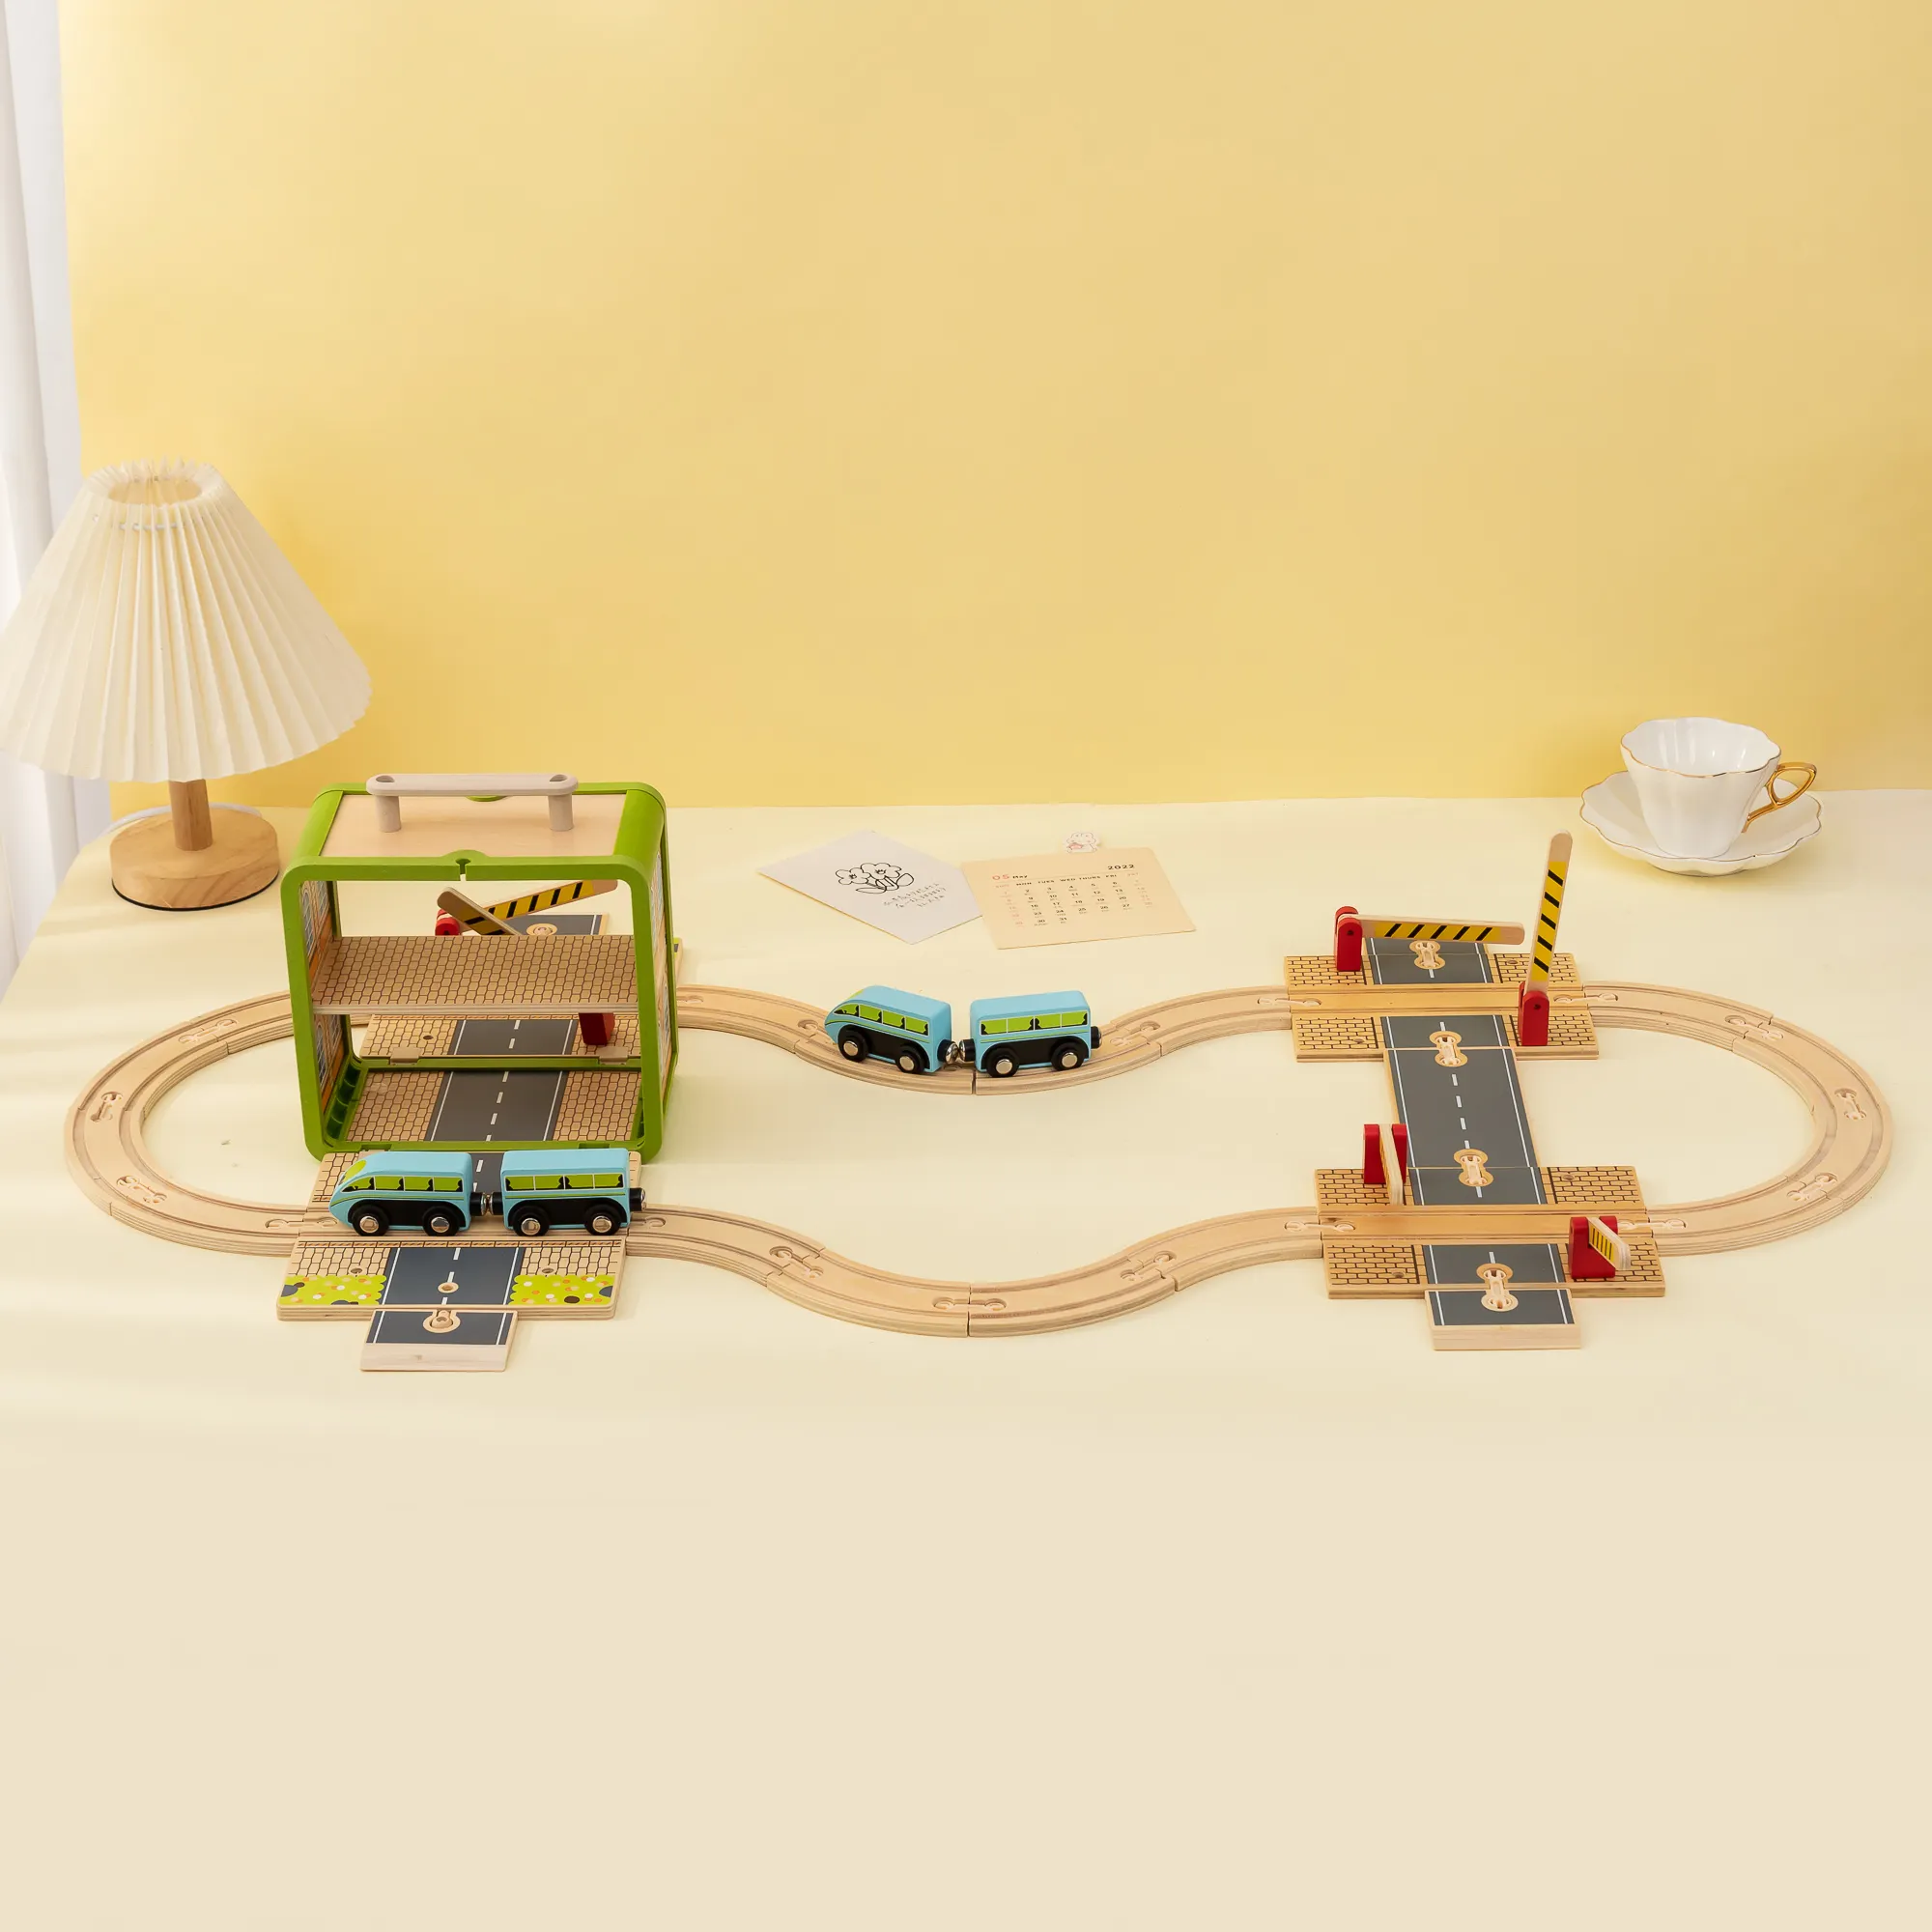 UDEAS OEM רכבת משחקיה מכונית משחק תיבת אחסון סט צעצוע מסלול רכבת מעץ לילדים